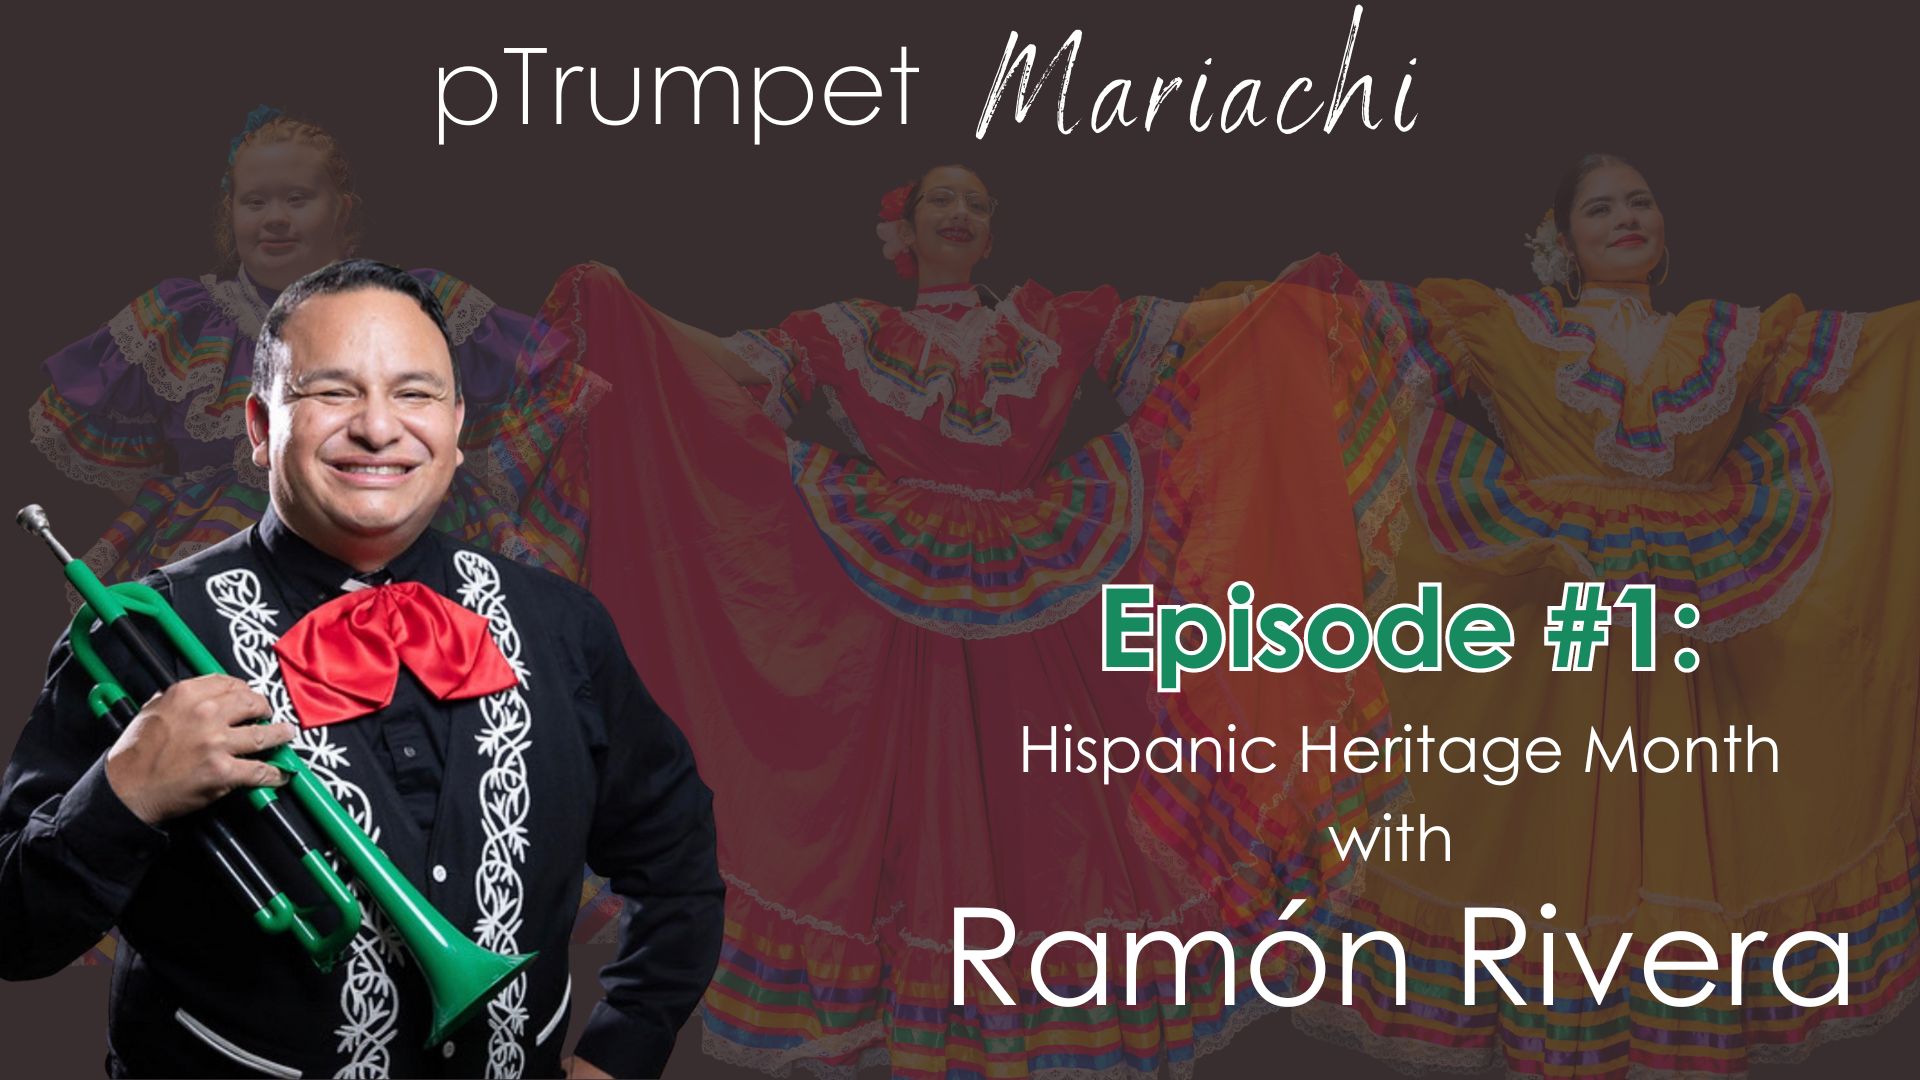 Teaching Mariachi in Hispanic Heritage Month with Ramón Rivera